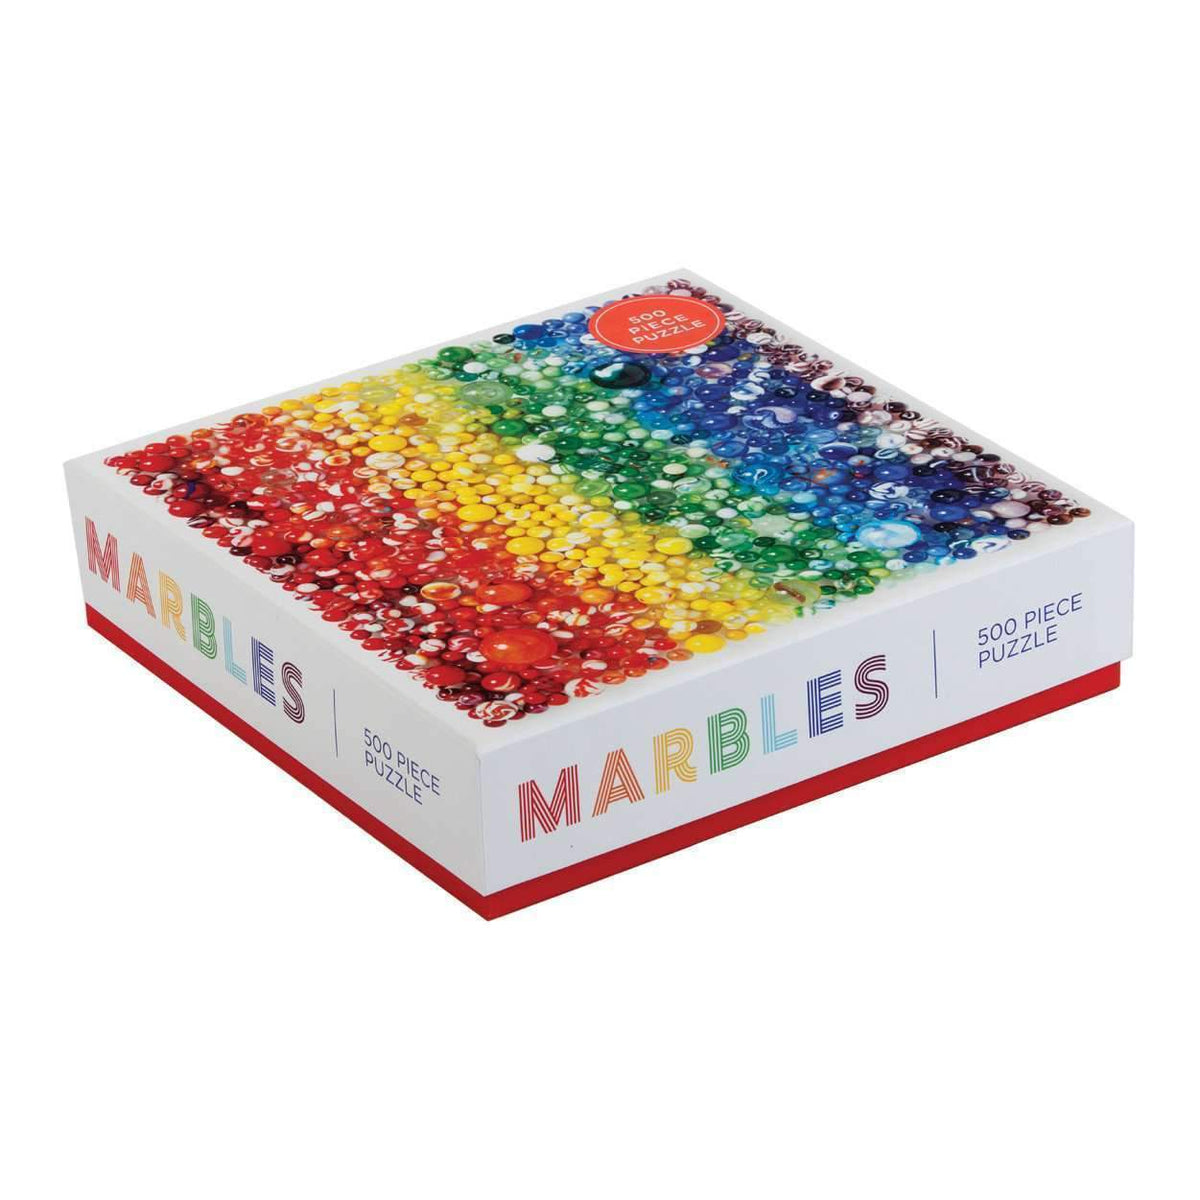 Marbles 500 Piece Puzzle - Quick Ship - Puzzlicious.com